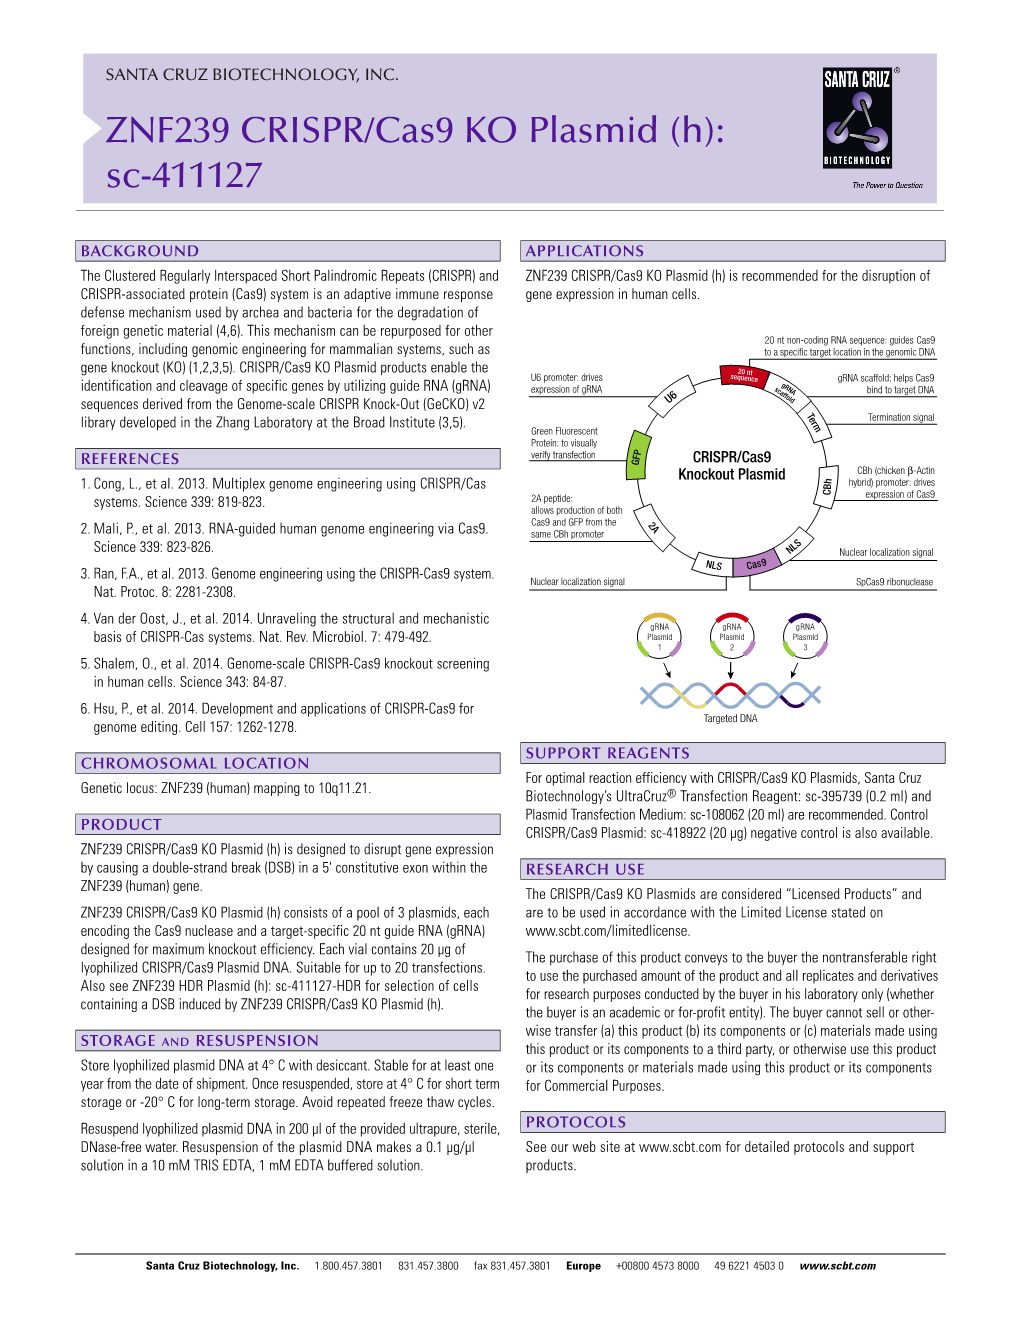 ZNF239 CRISPR/Cas9 KO Plasmid (H): Sc-411127